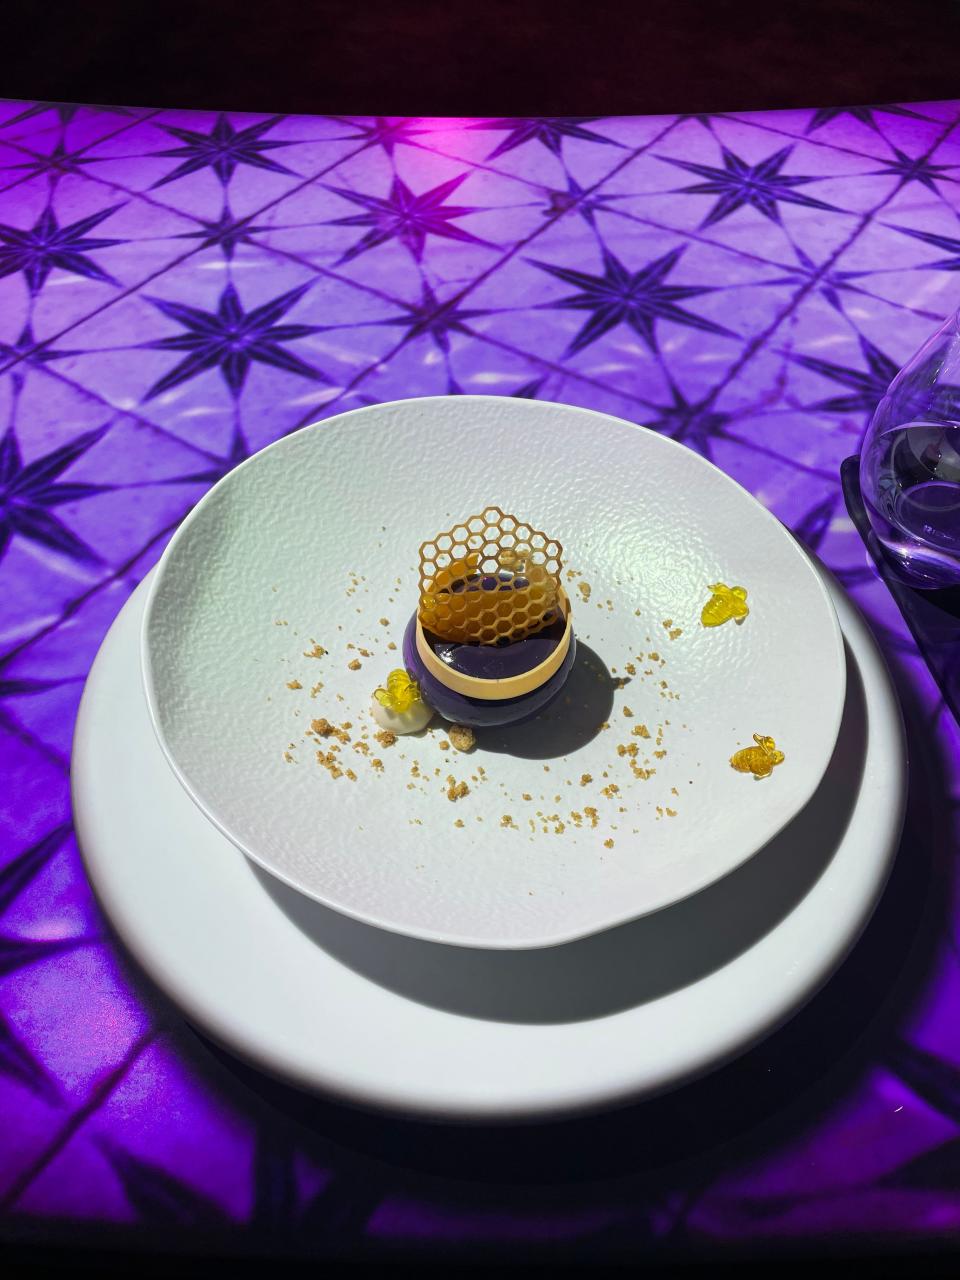 The lavender honey mousse dessert at 360.